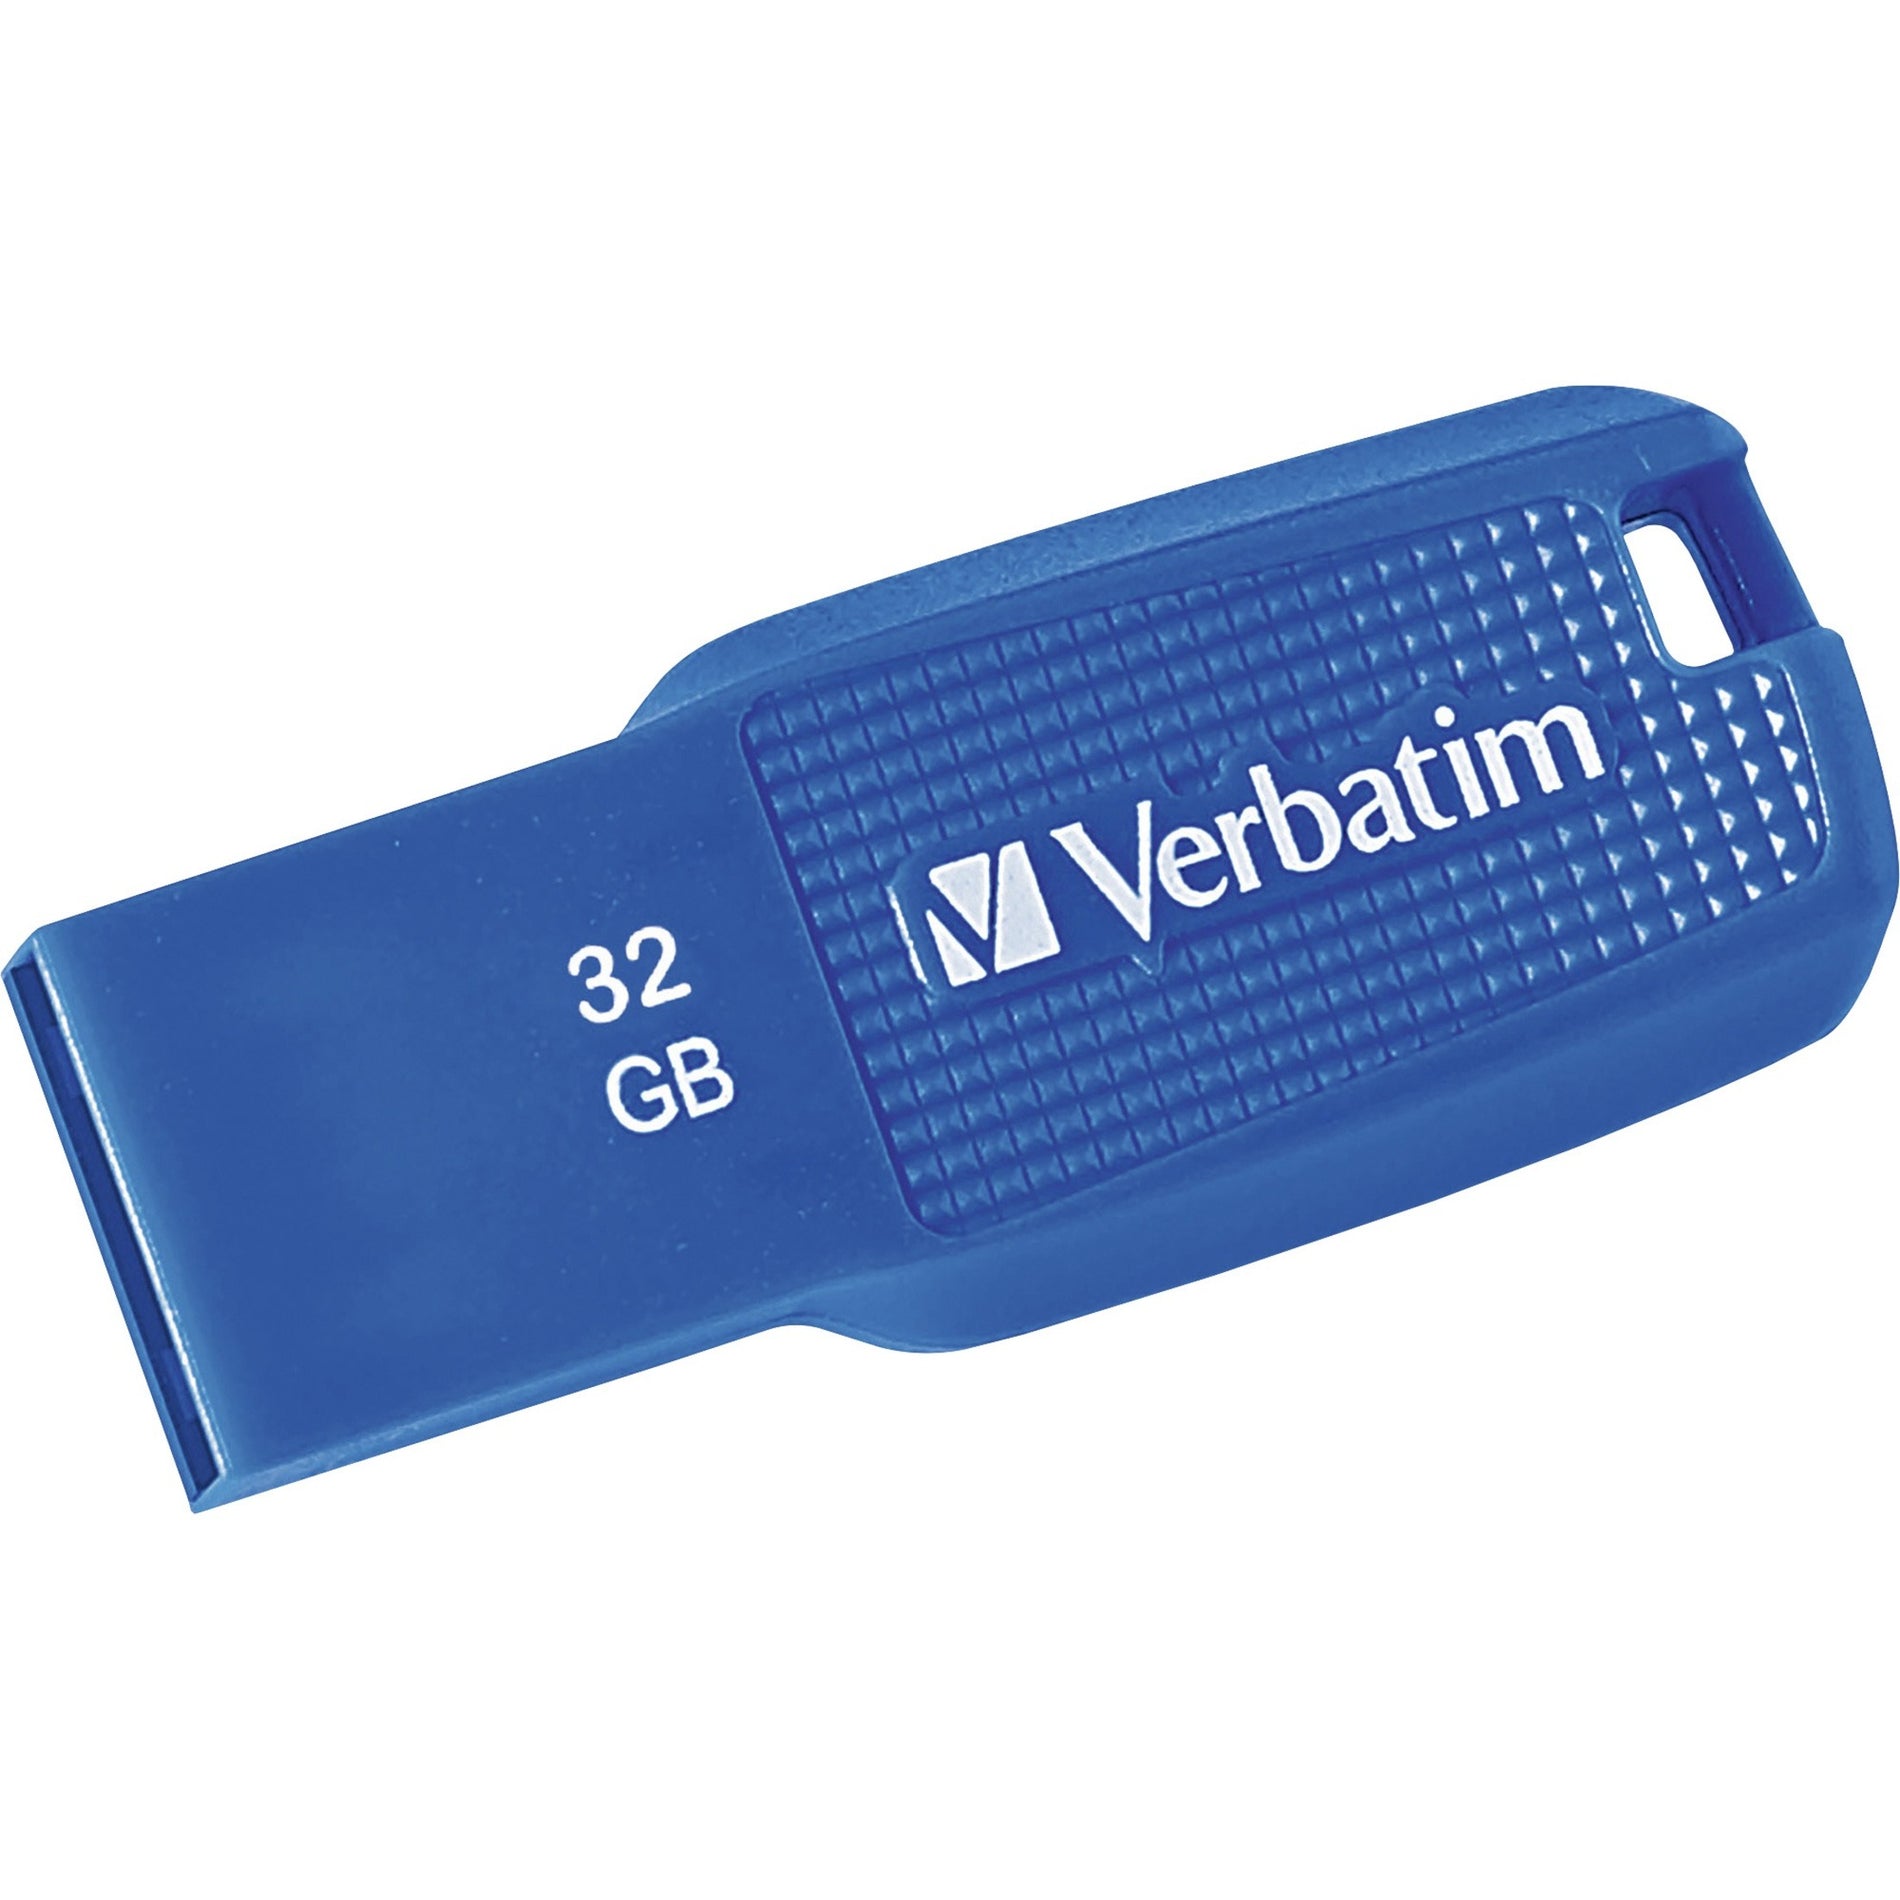 Verbatim 70878 32GB Ergo USB 3.0 Flash Drive - Blue, Password Protection, Ergonomic, Capless, Lanyard